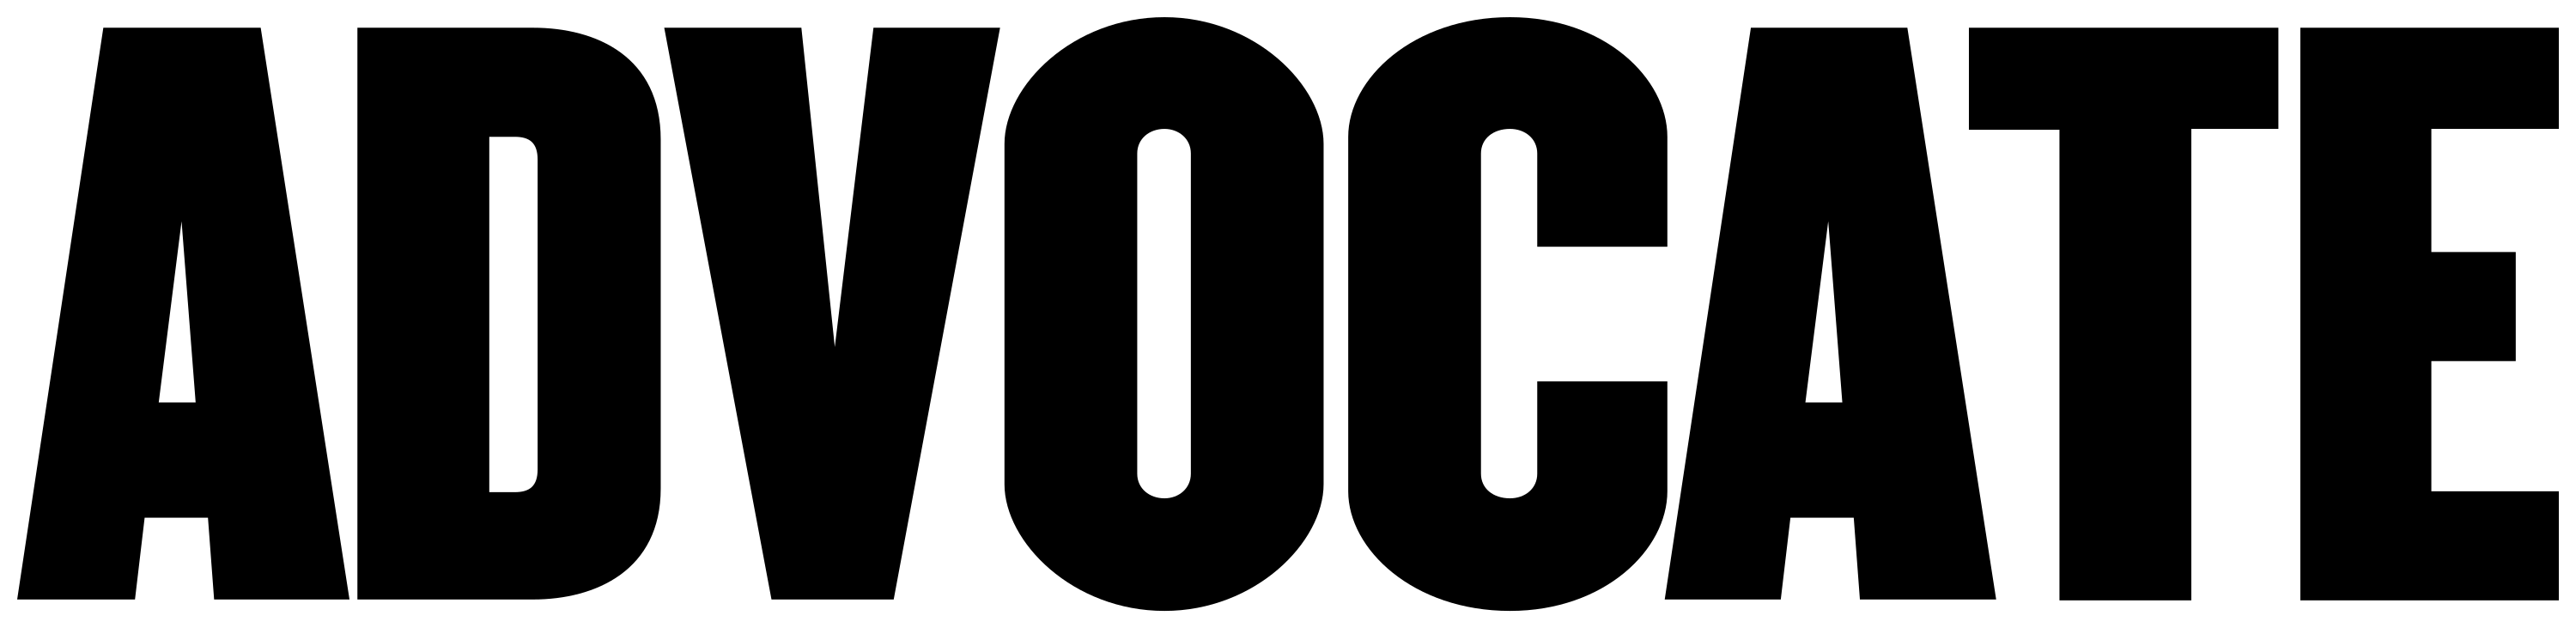 Advocate Logo Black Text PNG